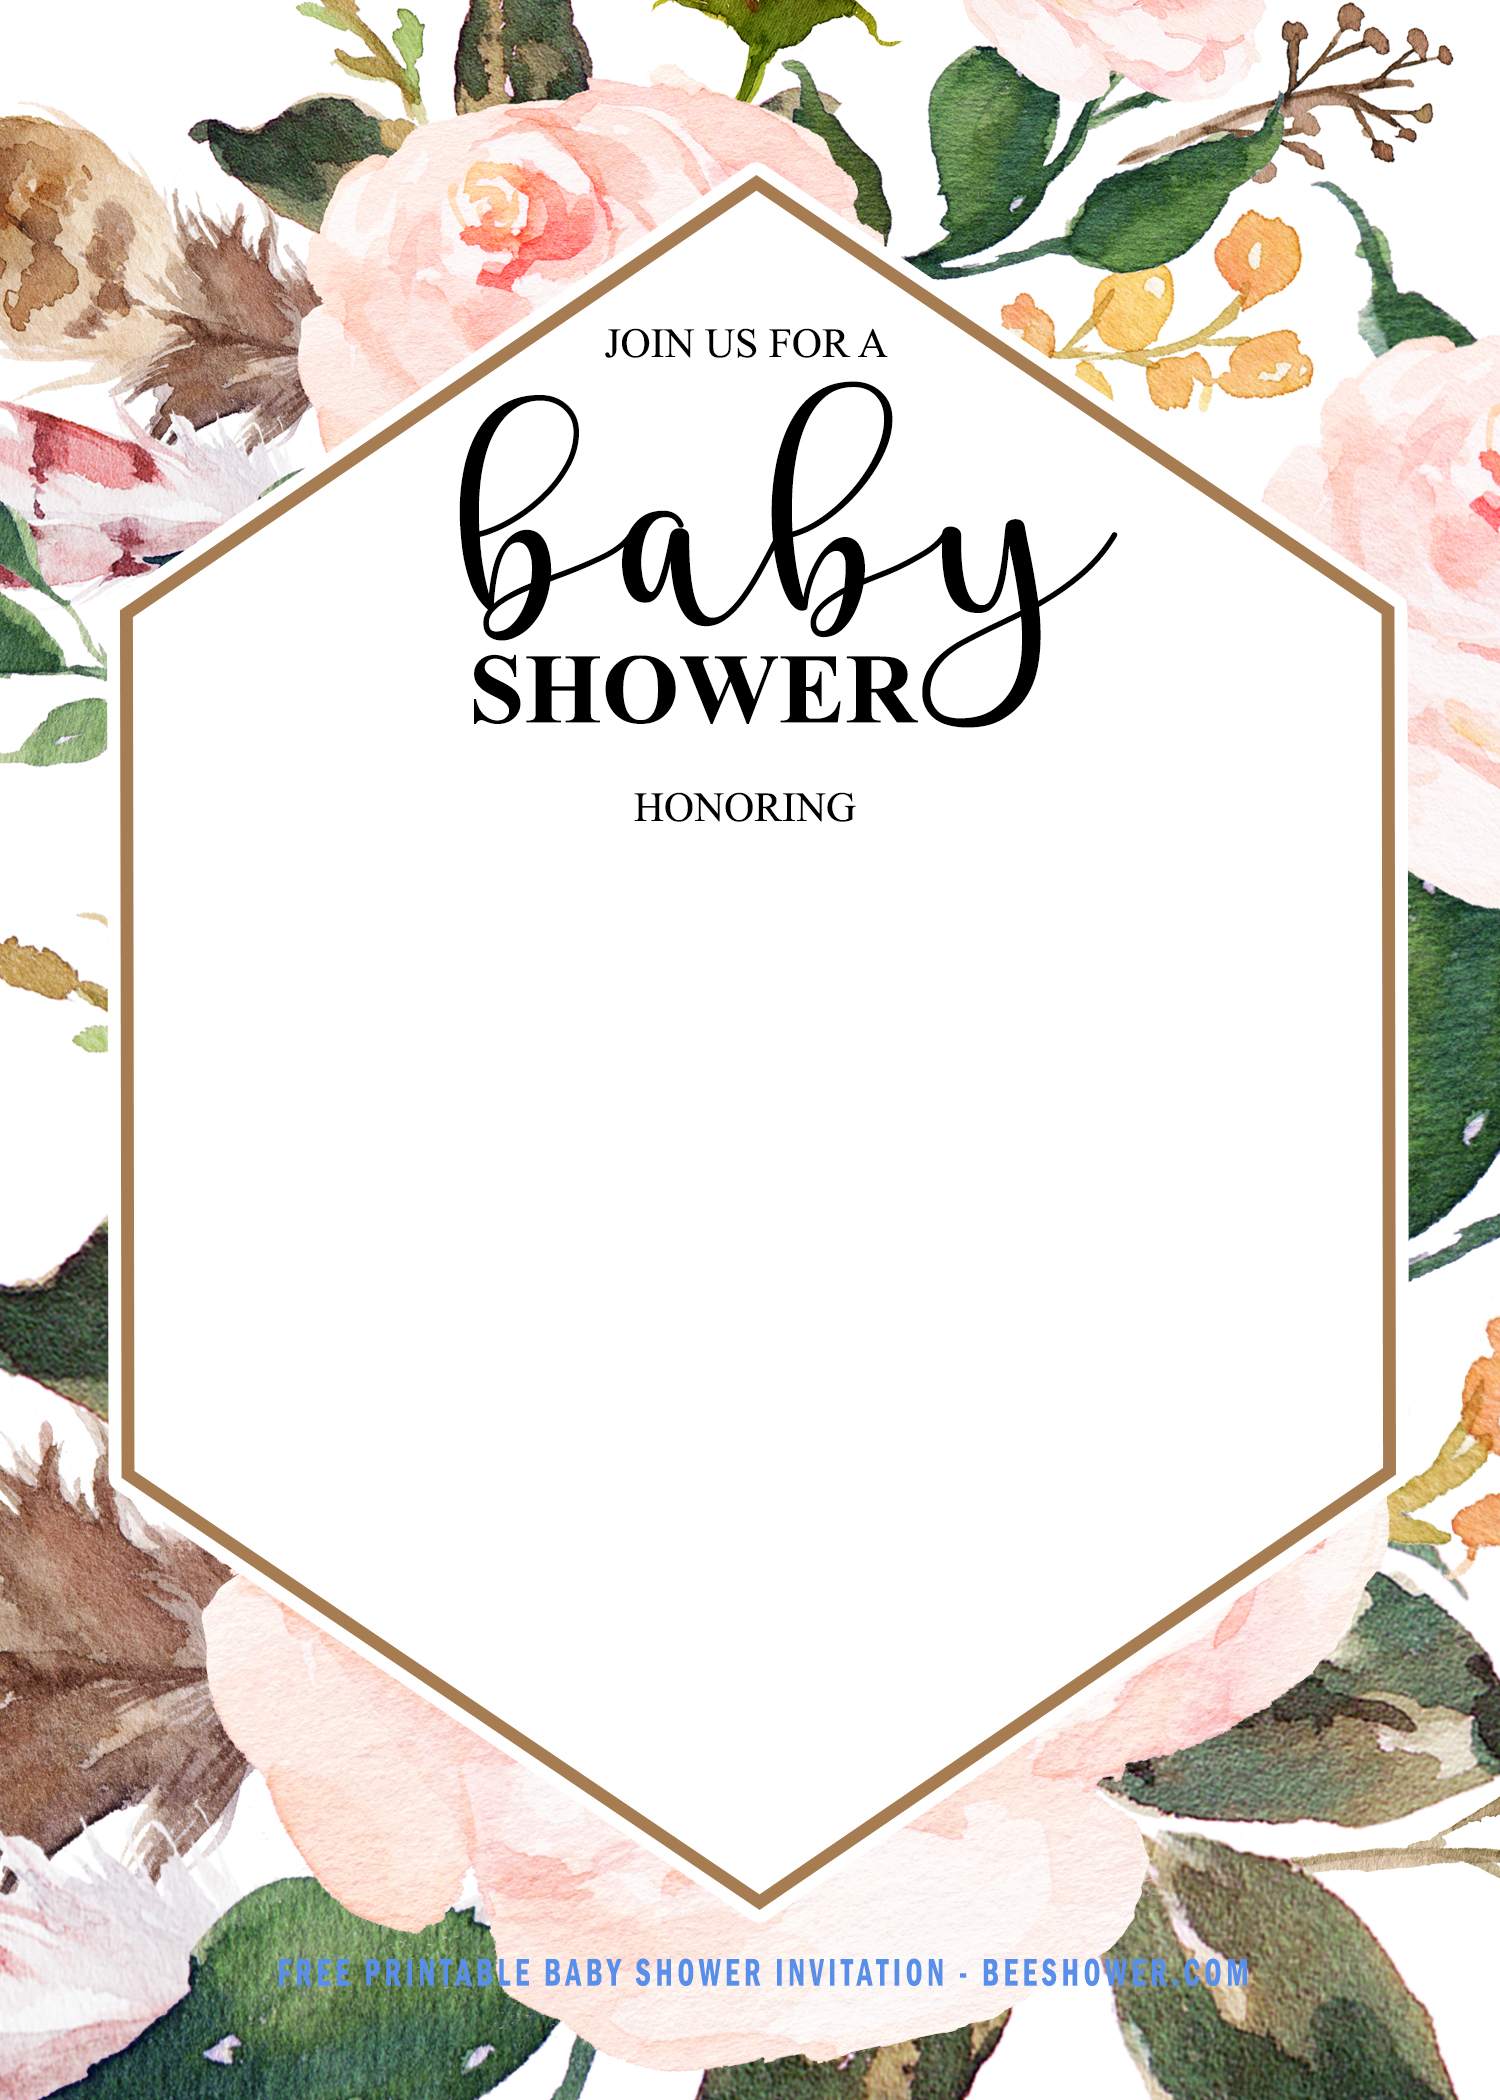 FREE Baby Shower Invitation For Girl FREE Printable Birthday Invitation Templates Bagvania